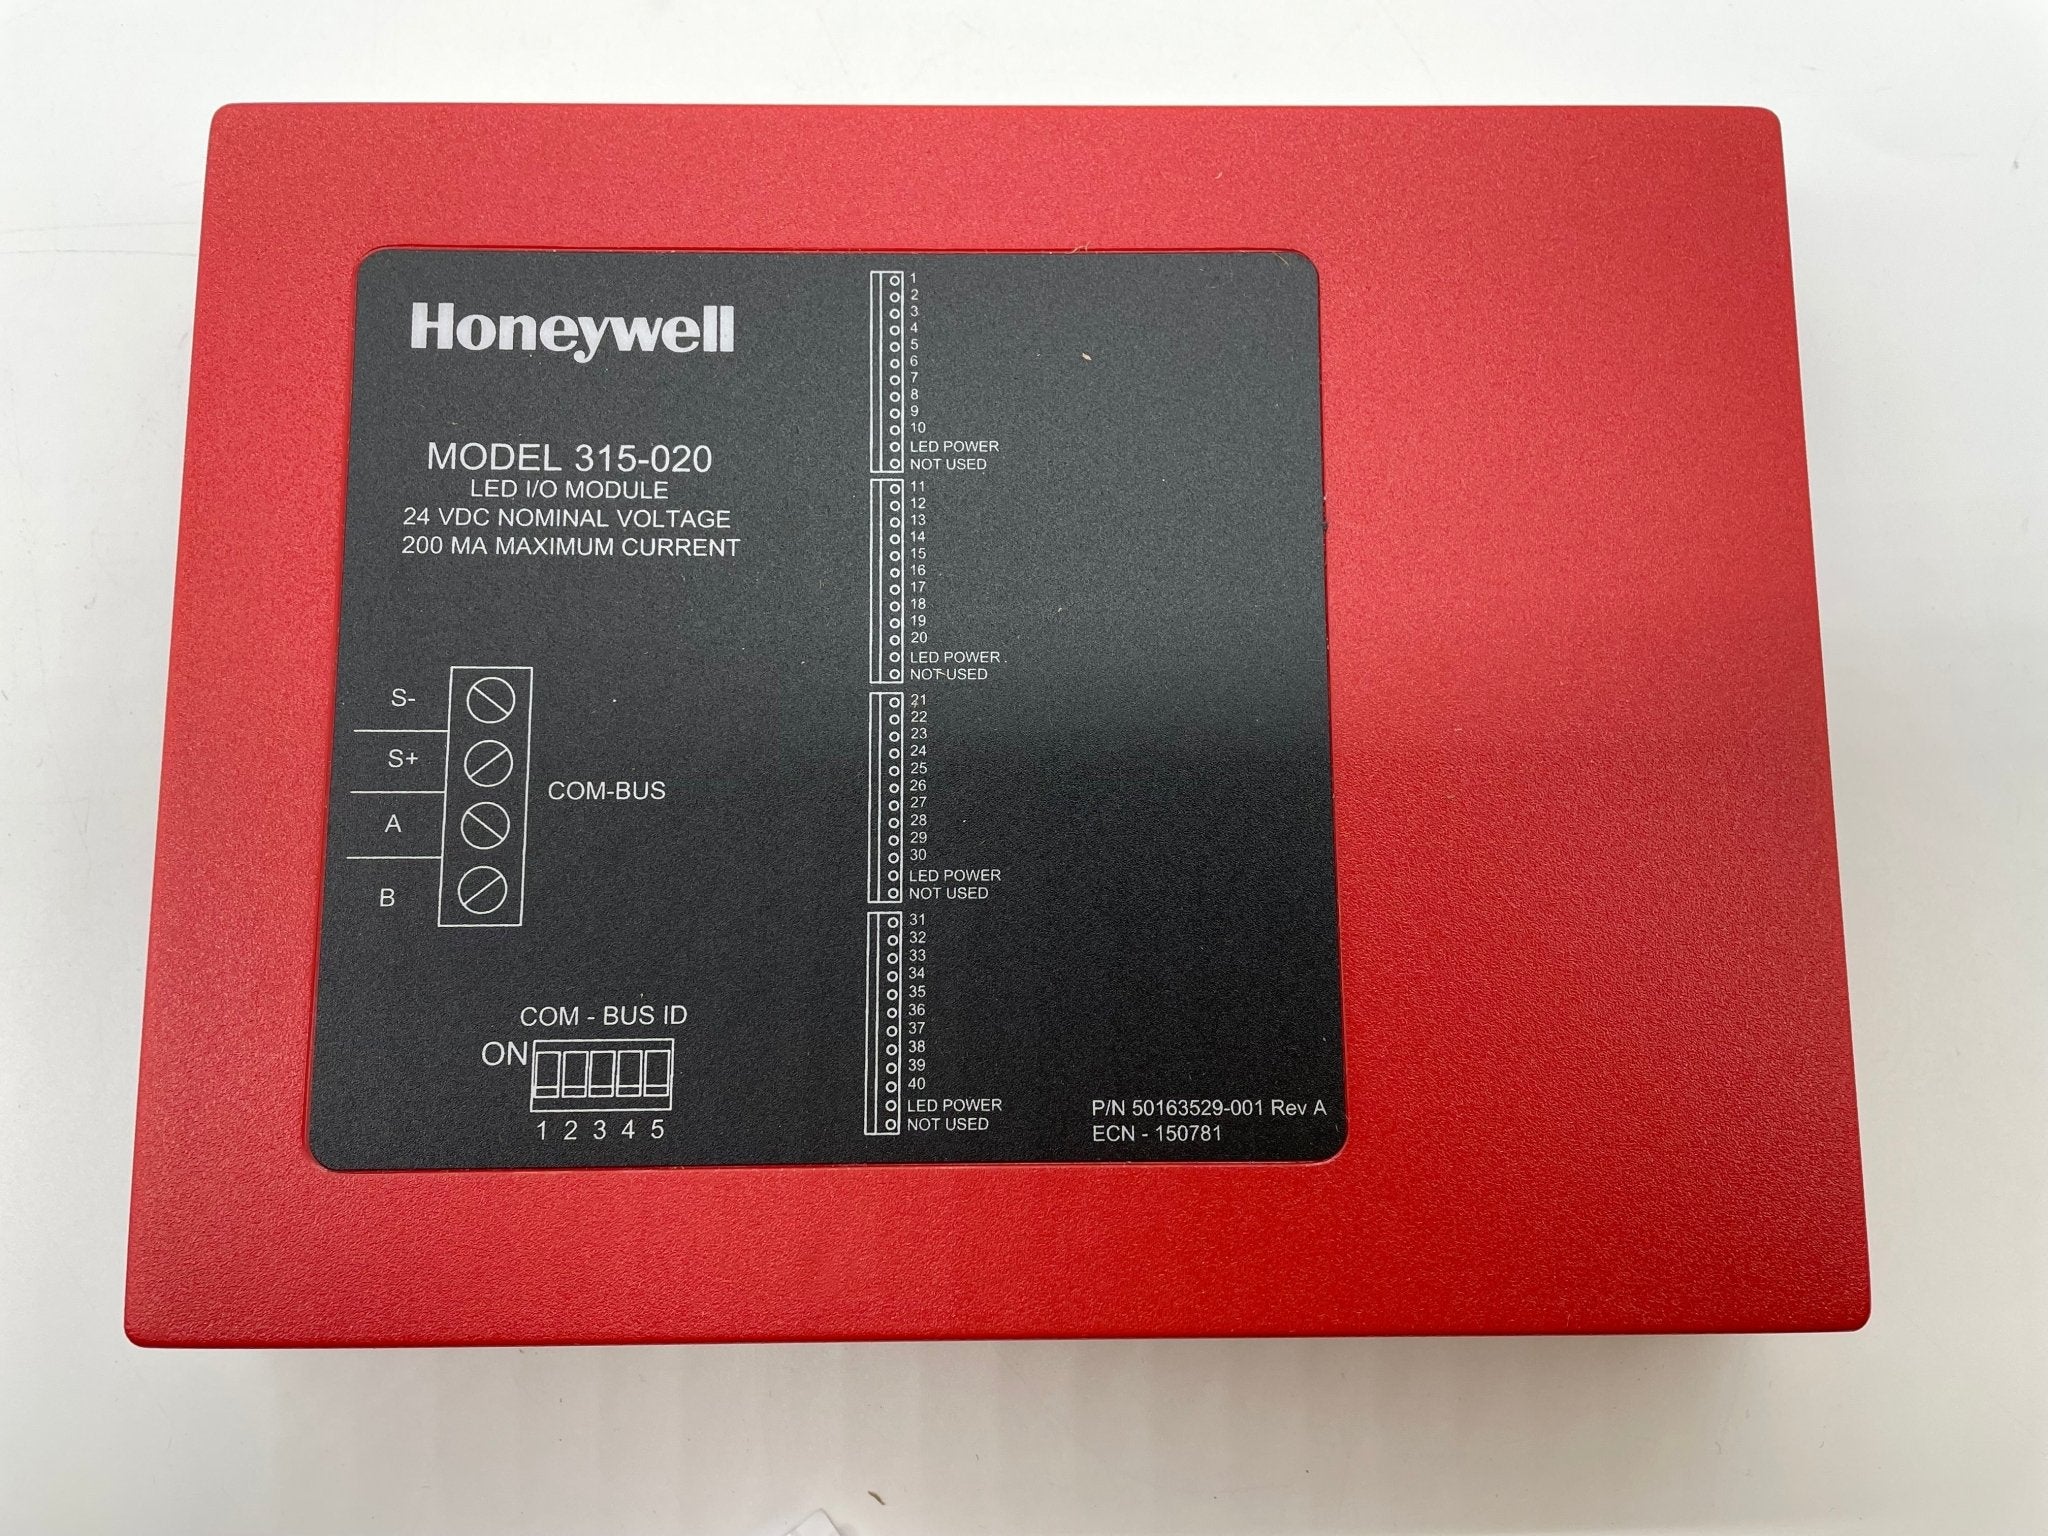 Honeywell 315-020 - The Fire Alarm Supplier